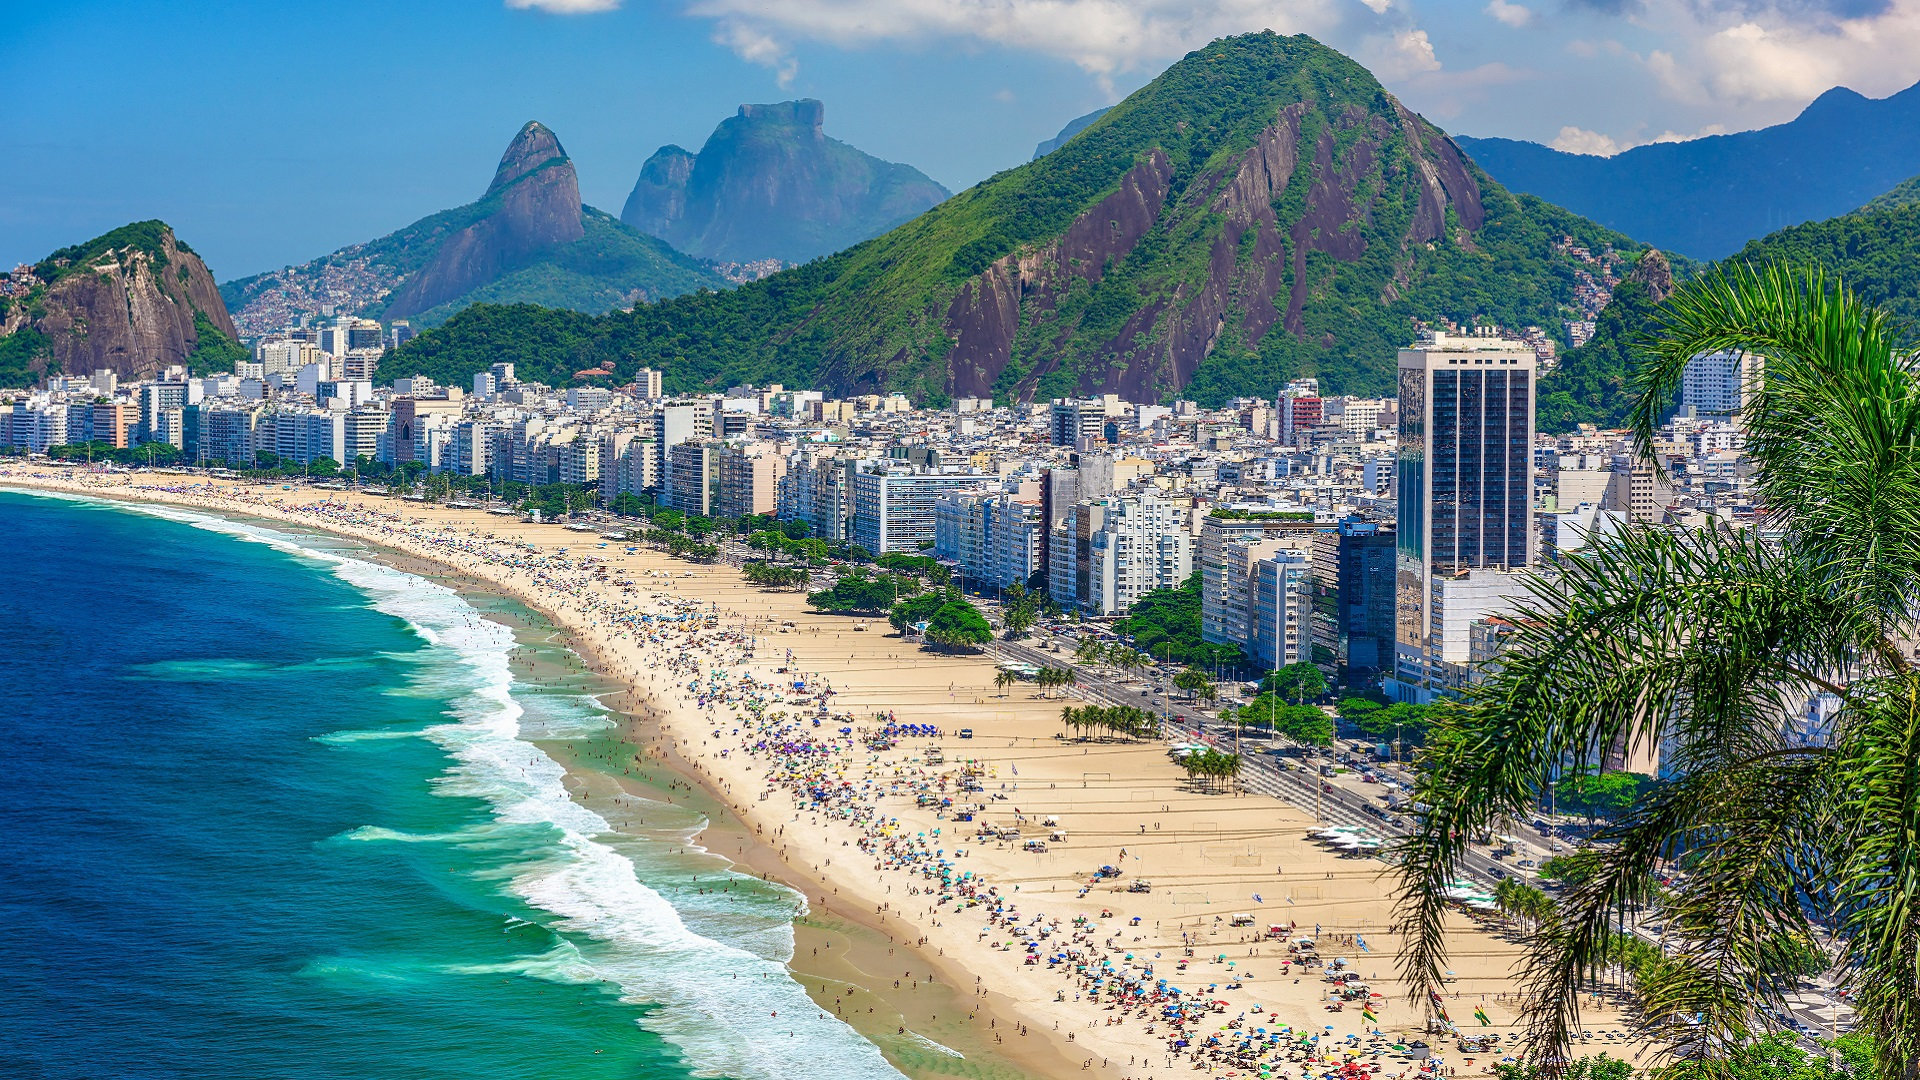 brazylia-dovolen-2020-sv-tky-z-jezdy-all-inclusive-last-minute